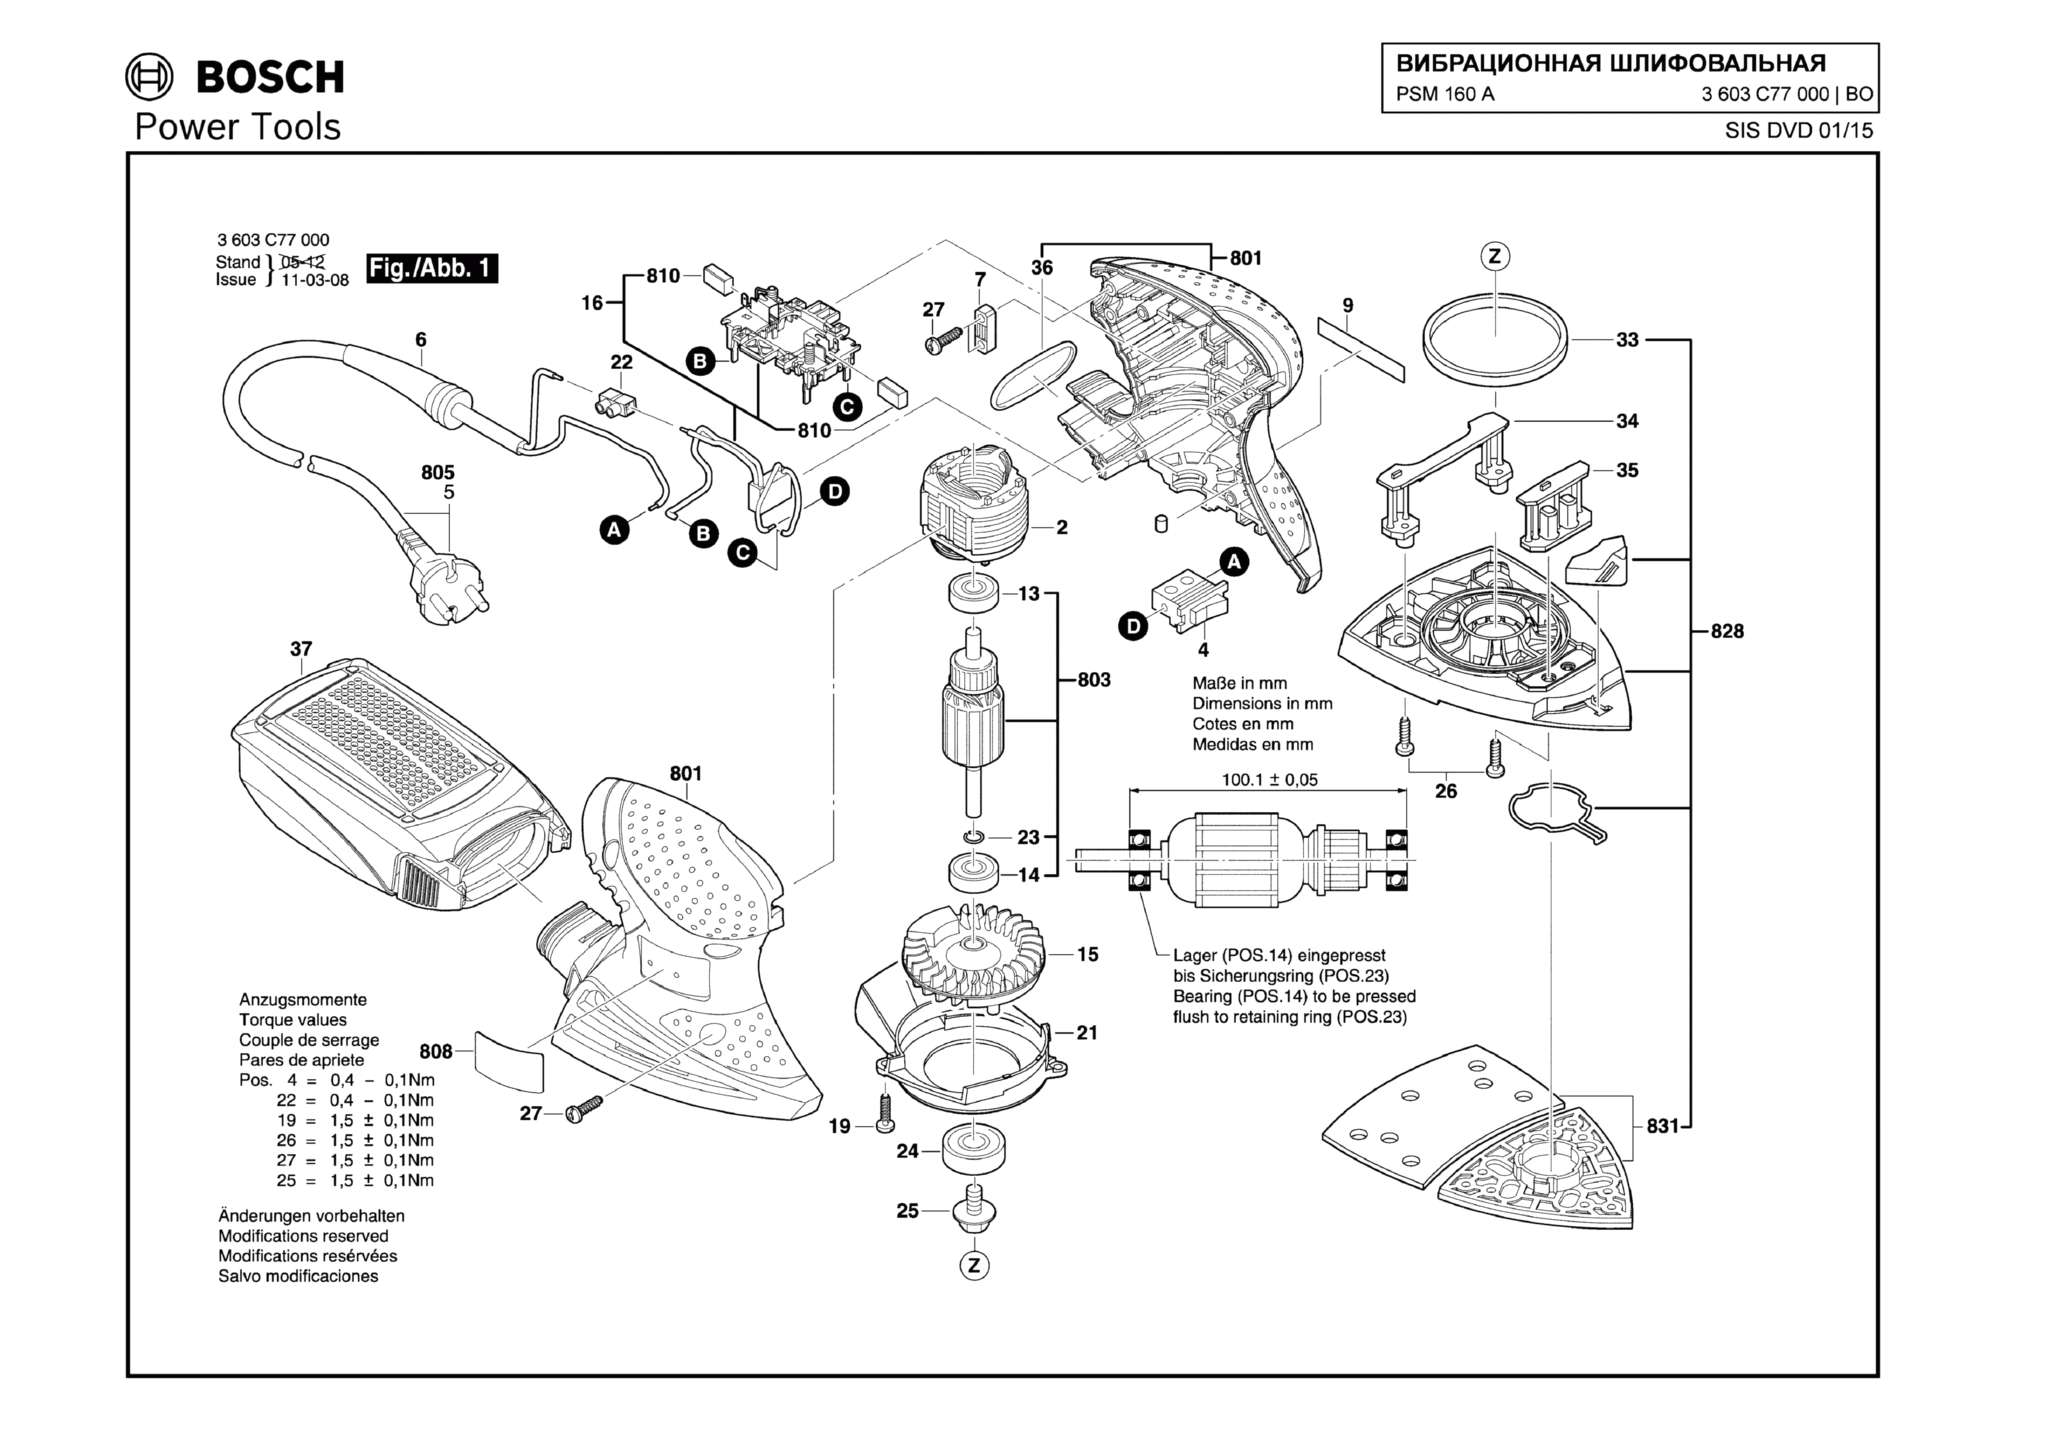 Запчасти, схема и деталировка Bosch PSM 160 A (ТИП 3603C77000)